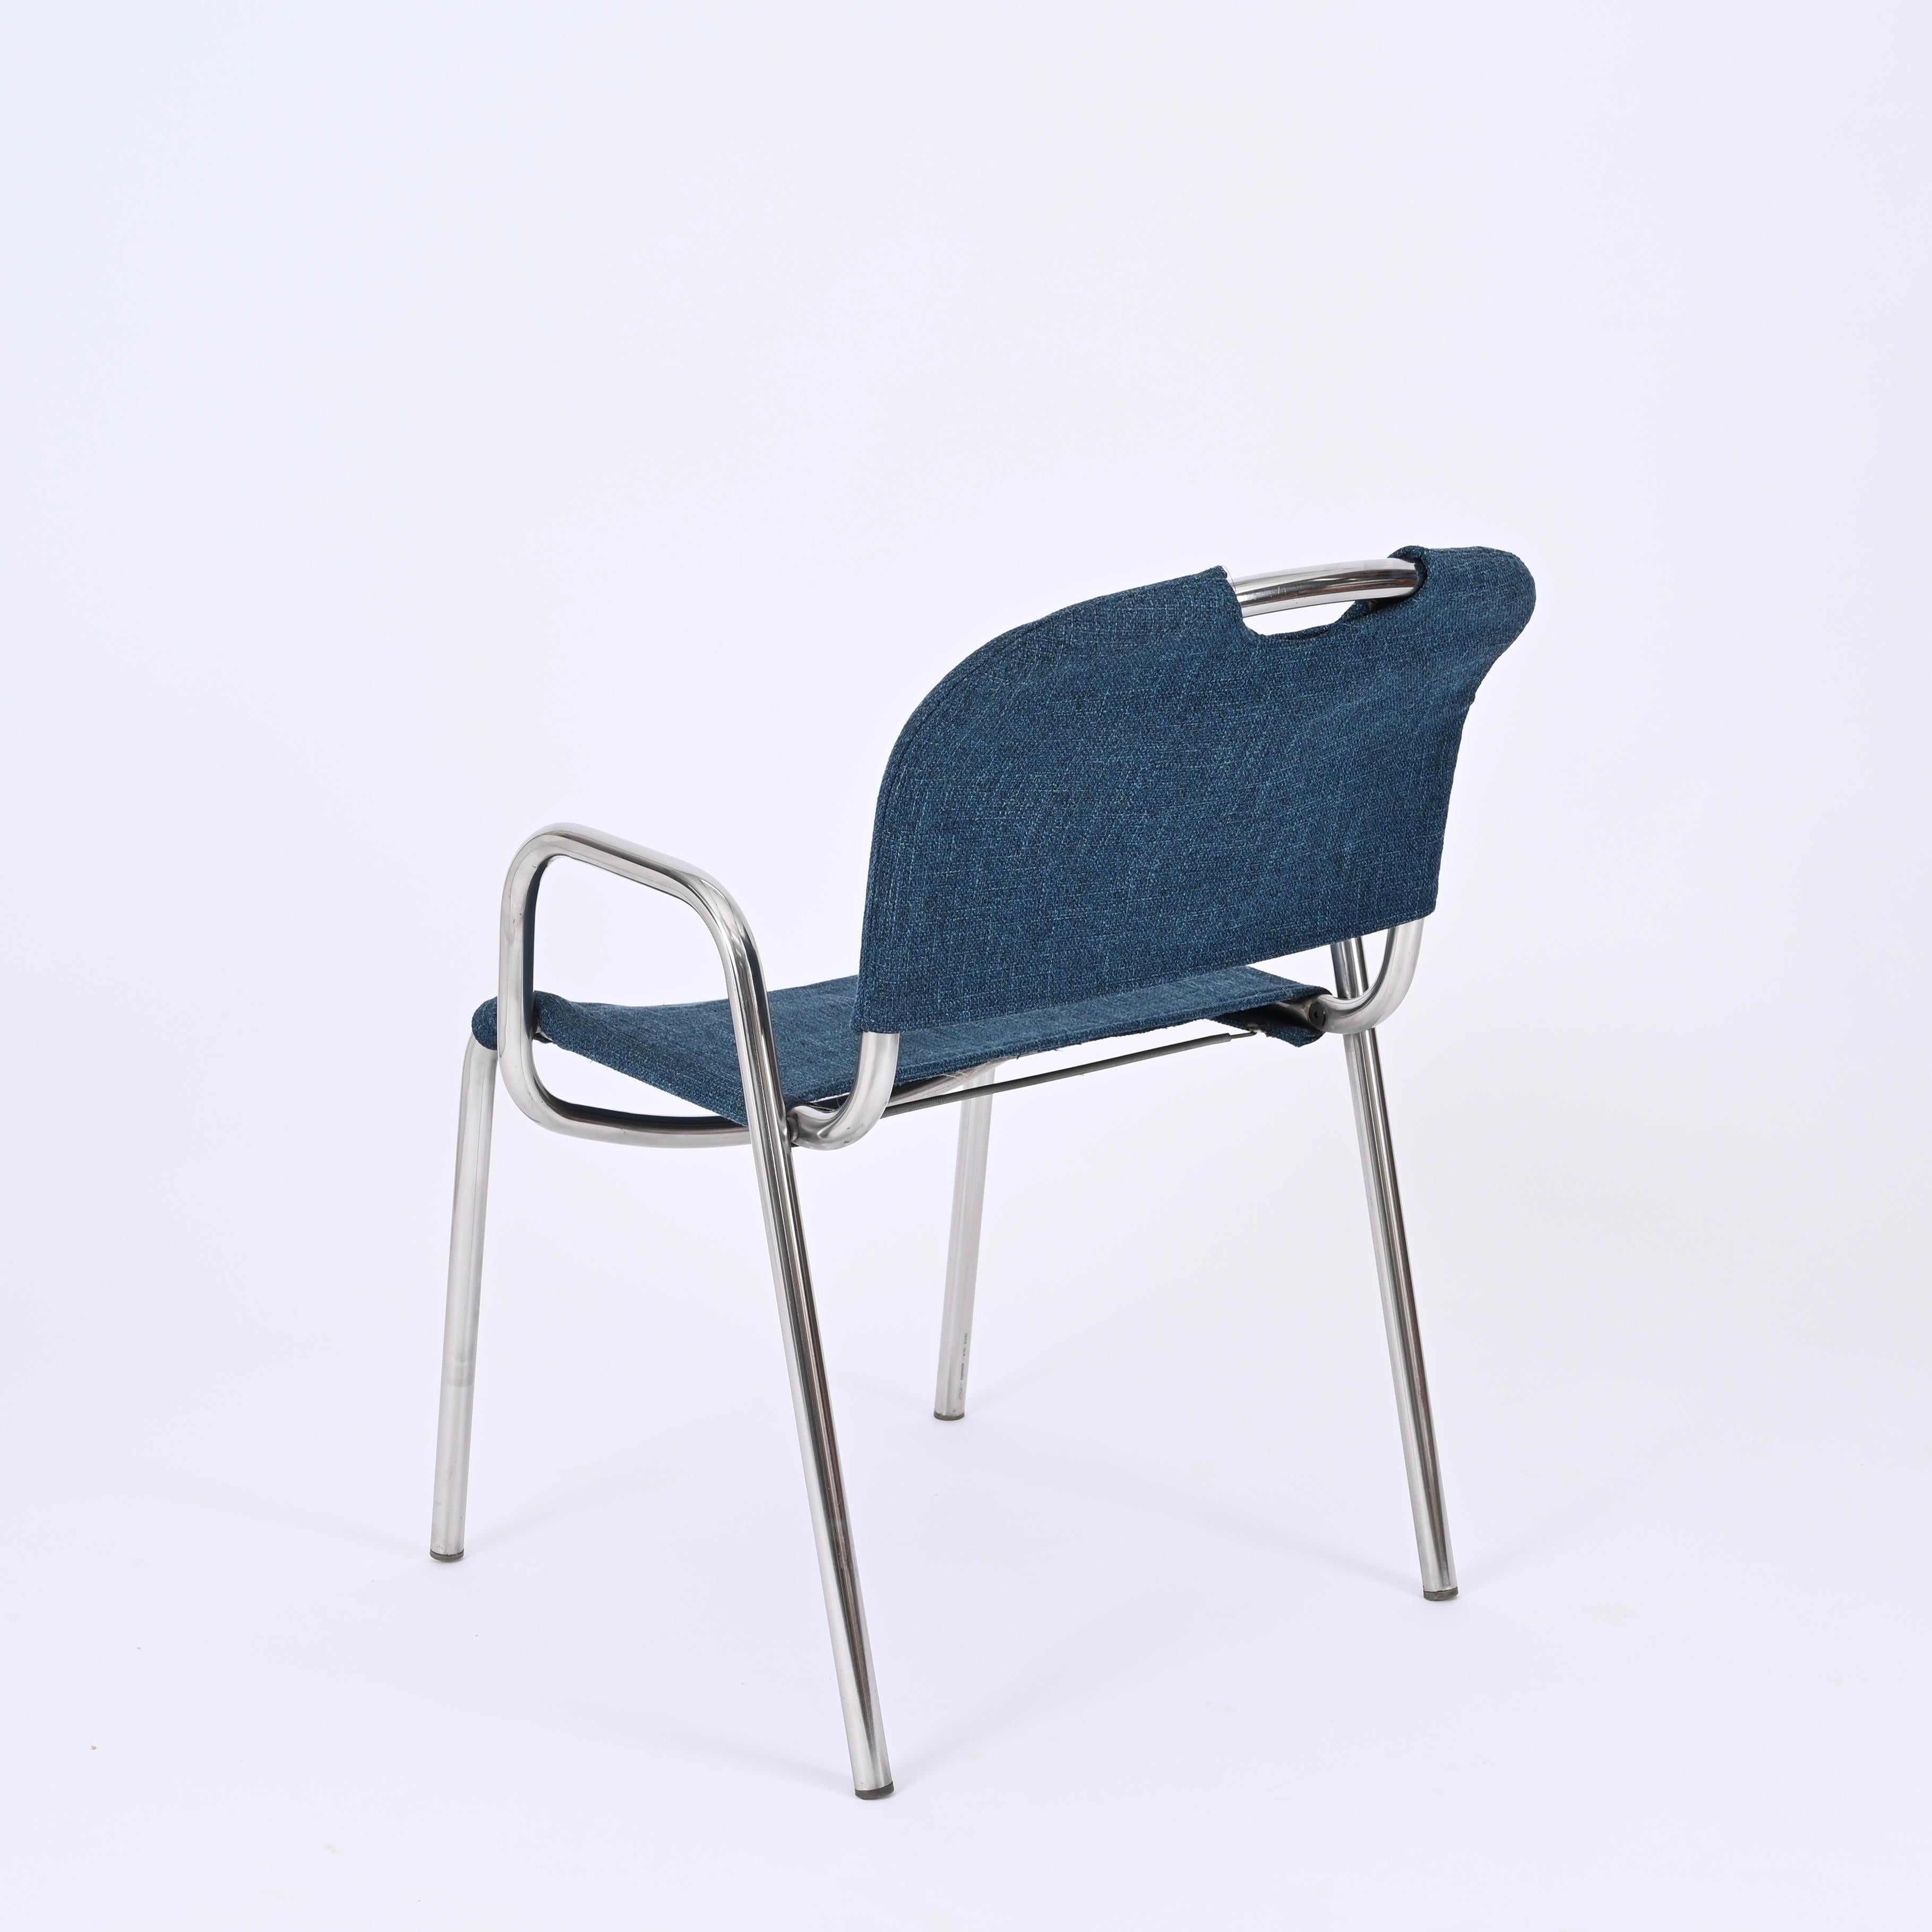 Mid-20th Century Pair of Blue Castiglietta Dining Chairs by Castiglioni for Zanotta, Italy 1960s For Sale